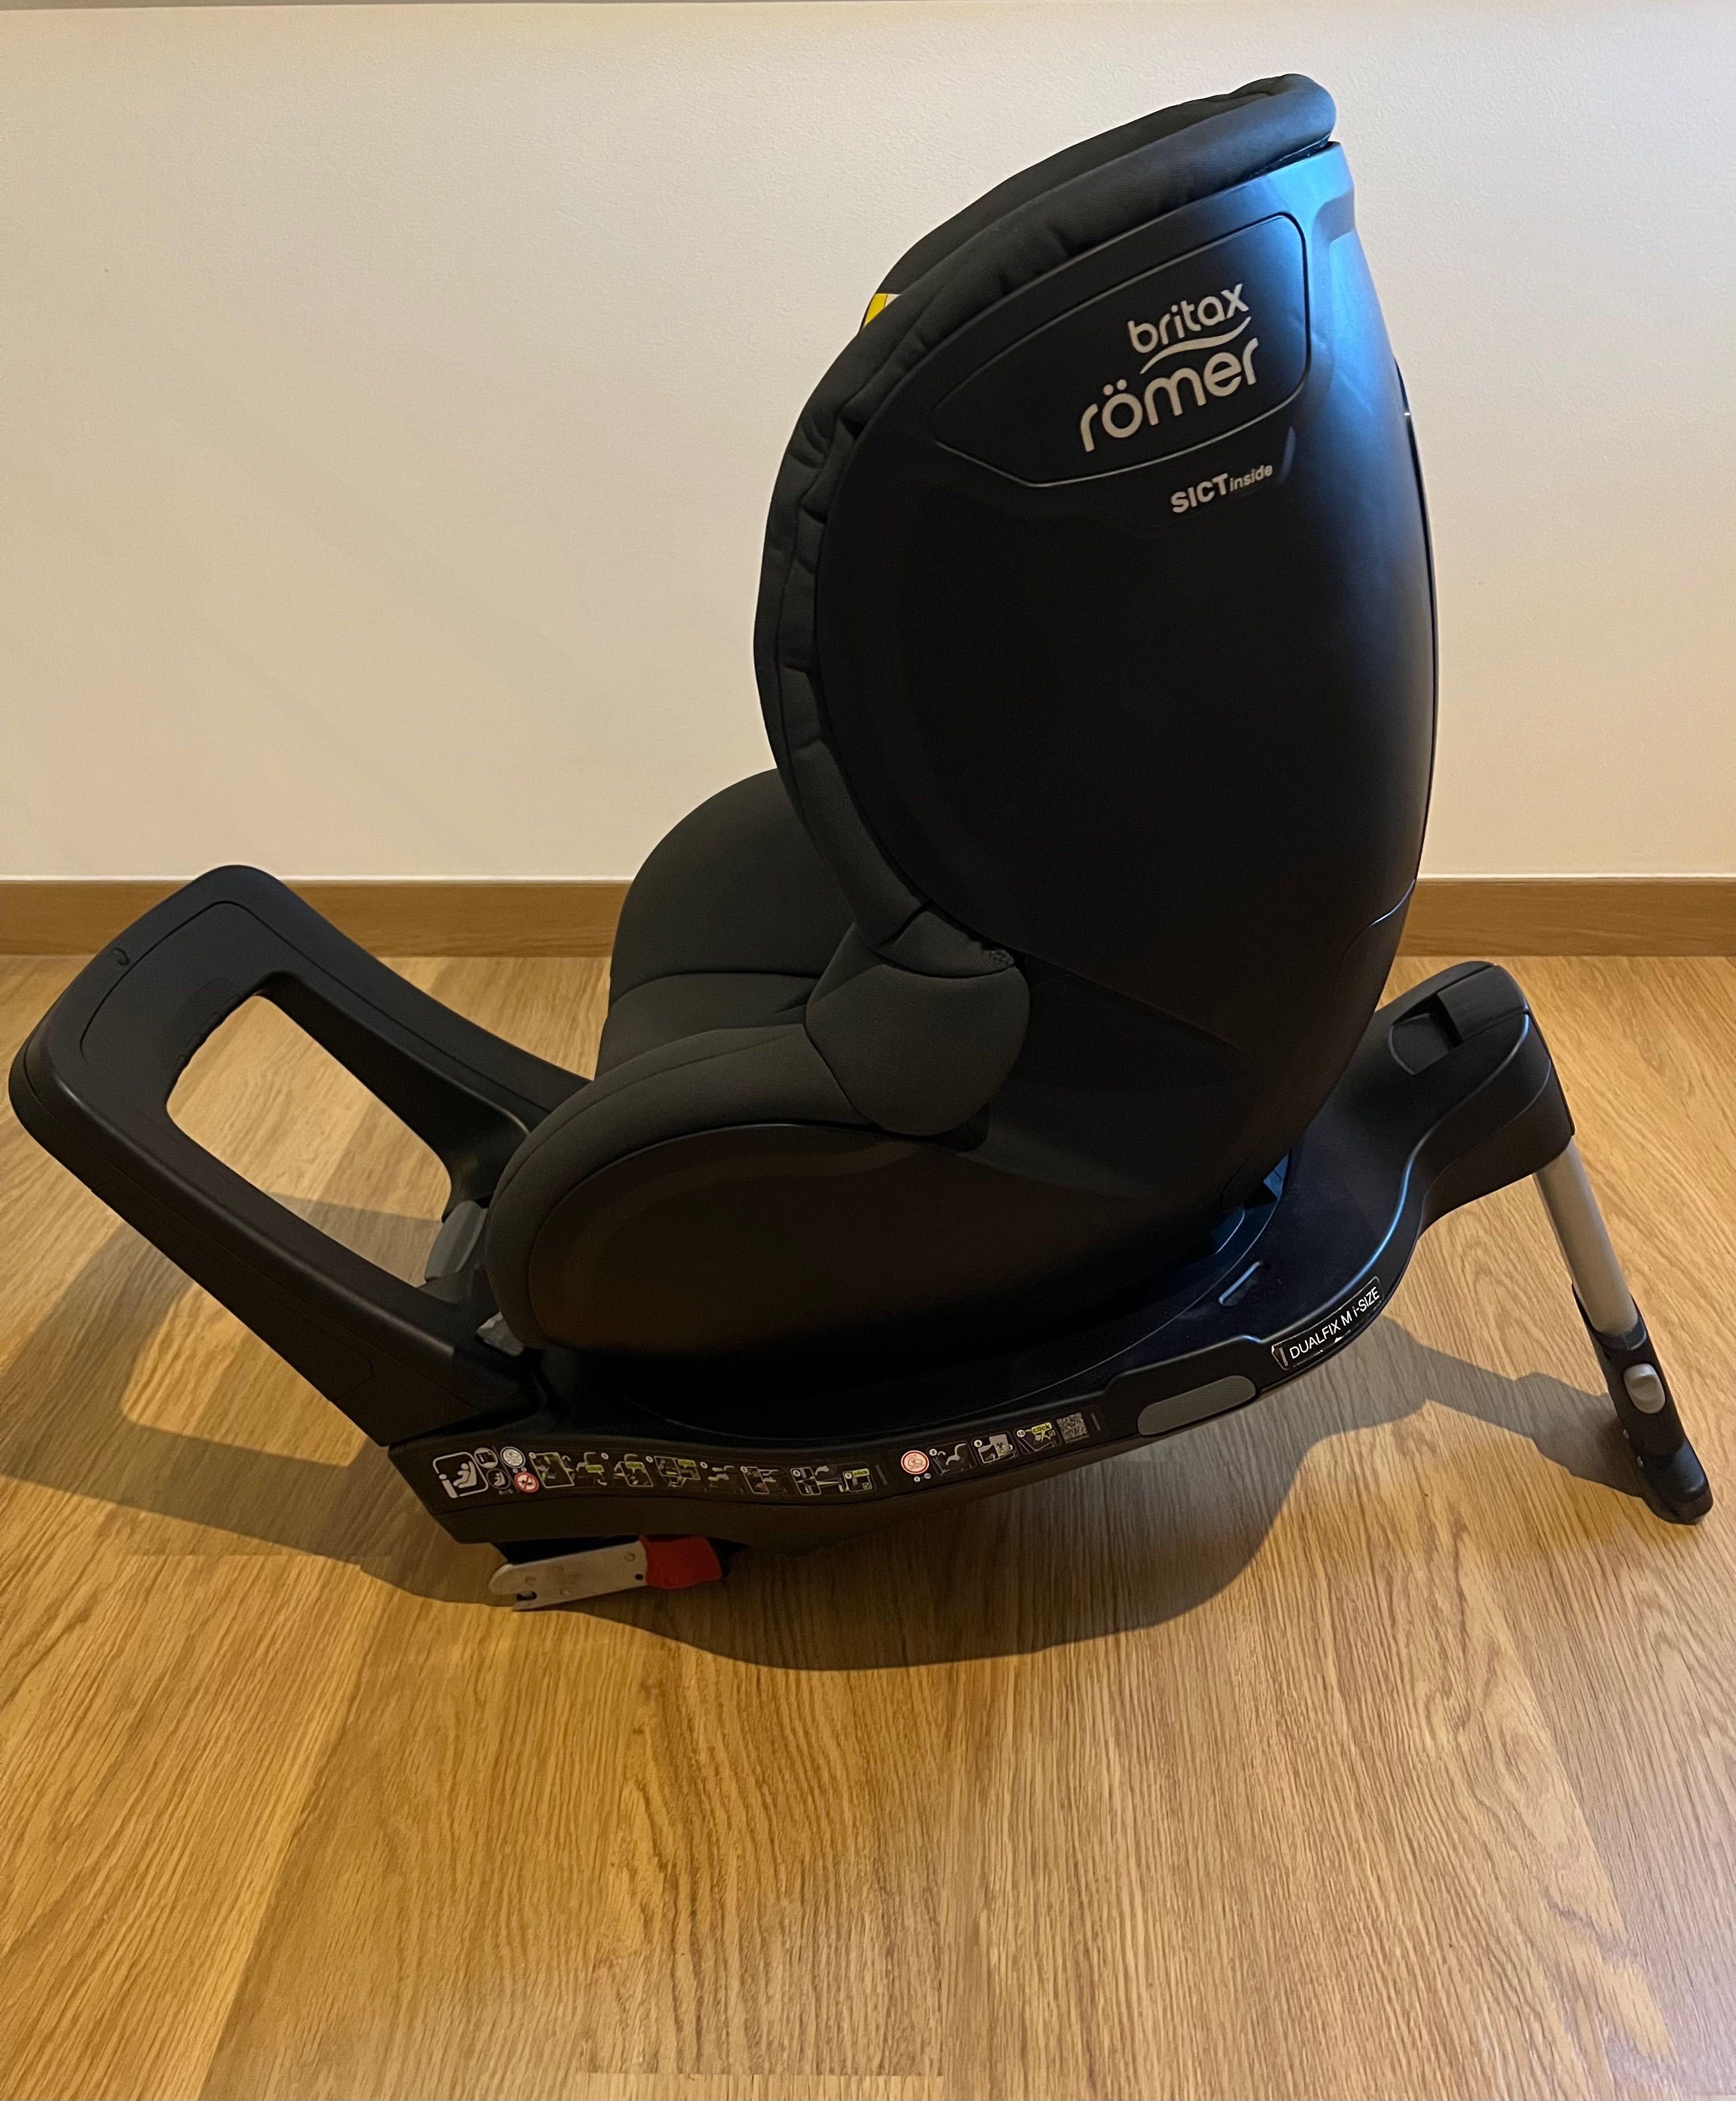 Britax Romer Cadeira Auto Dualfix M i-Size – Storm Grey